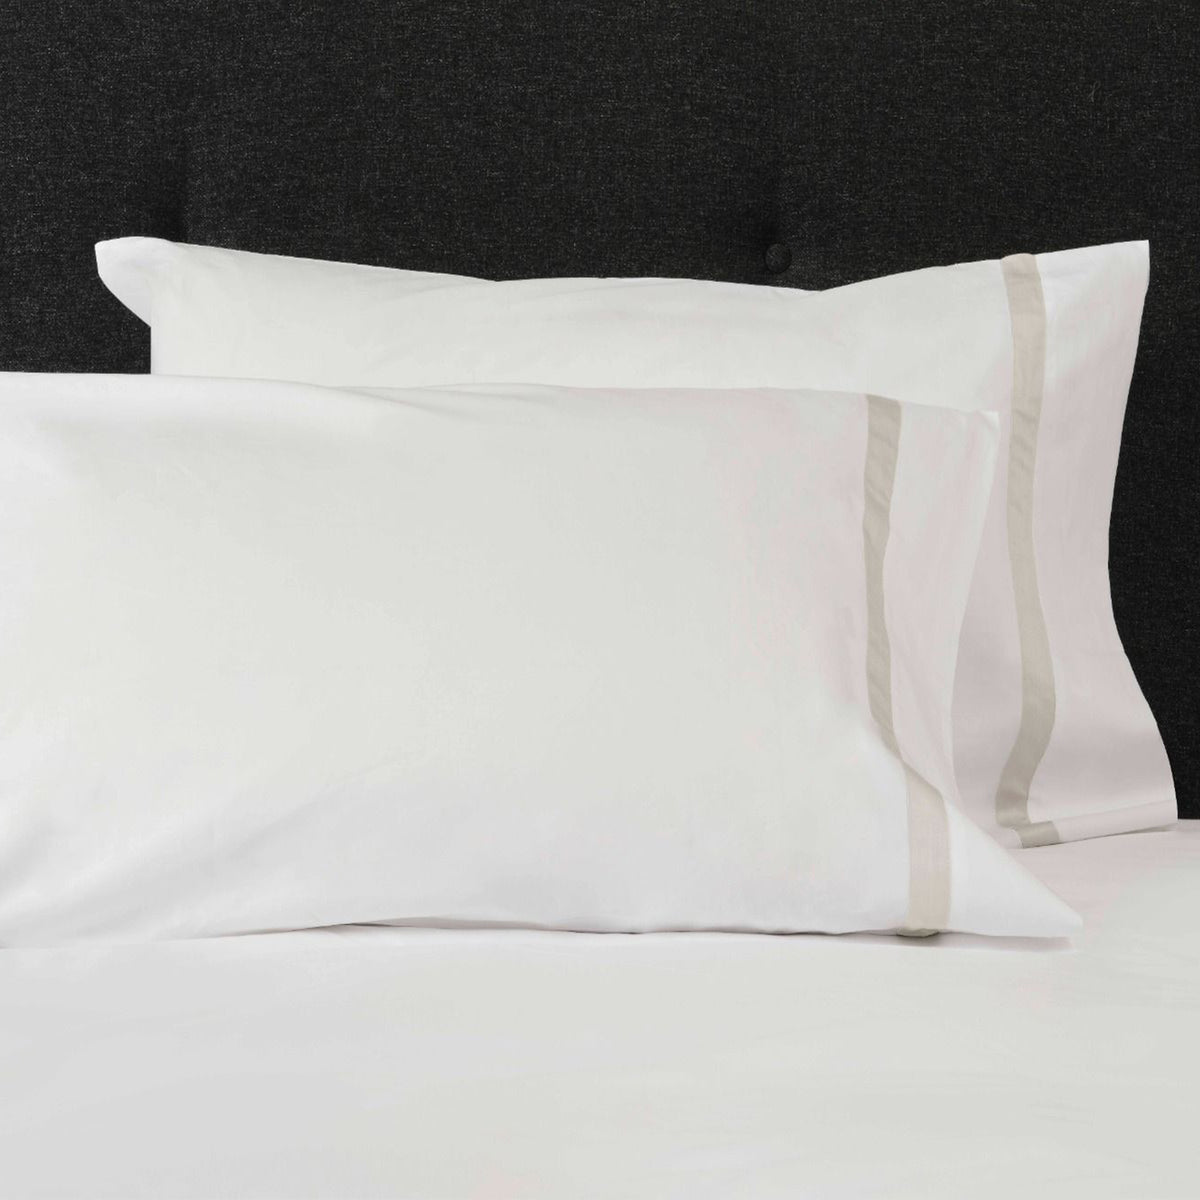 Pair of Pillowcases of Signoria Pegaso Bedding in White/Pearl Color